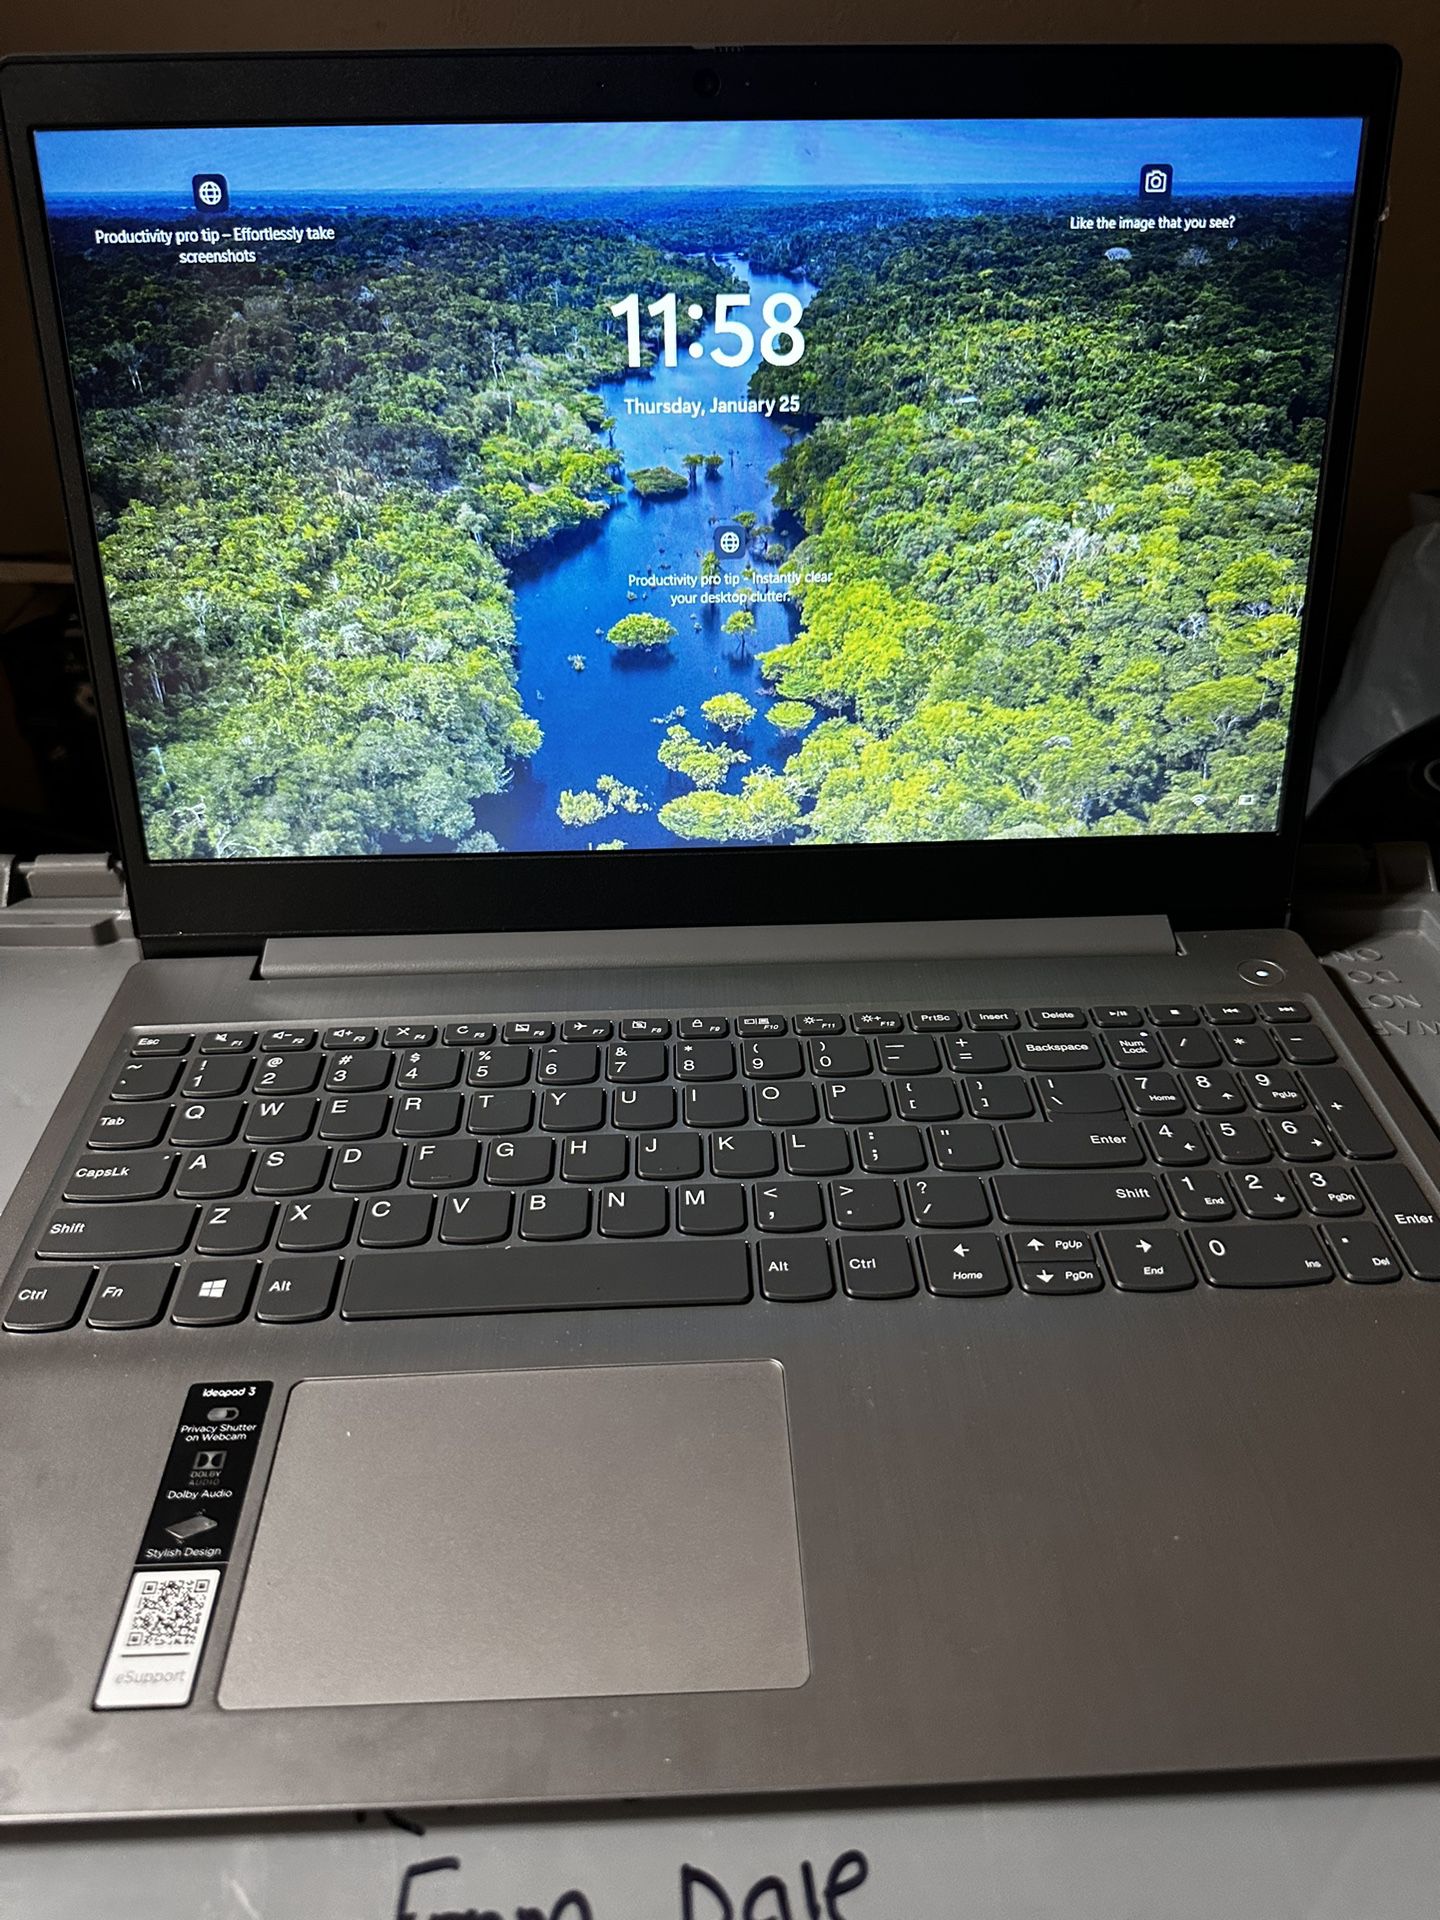 Lenovo Laptop Works Perfect 